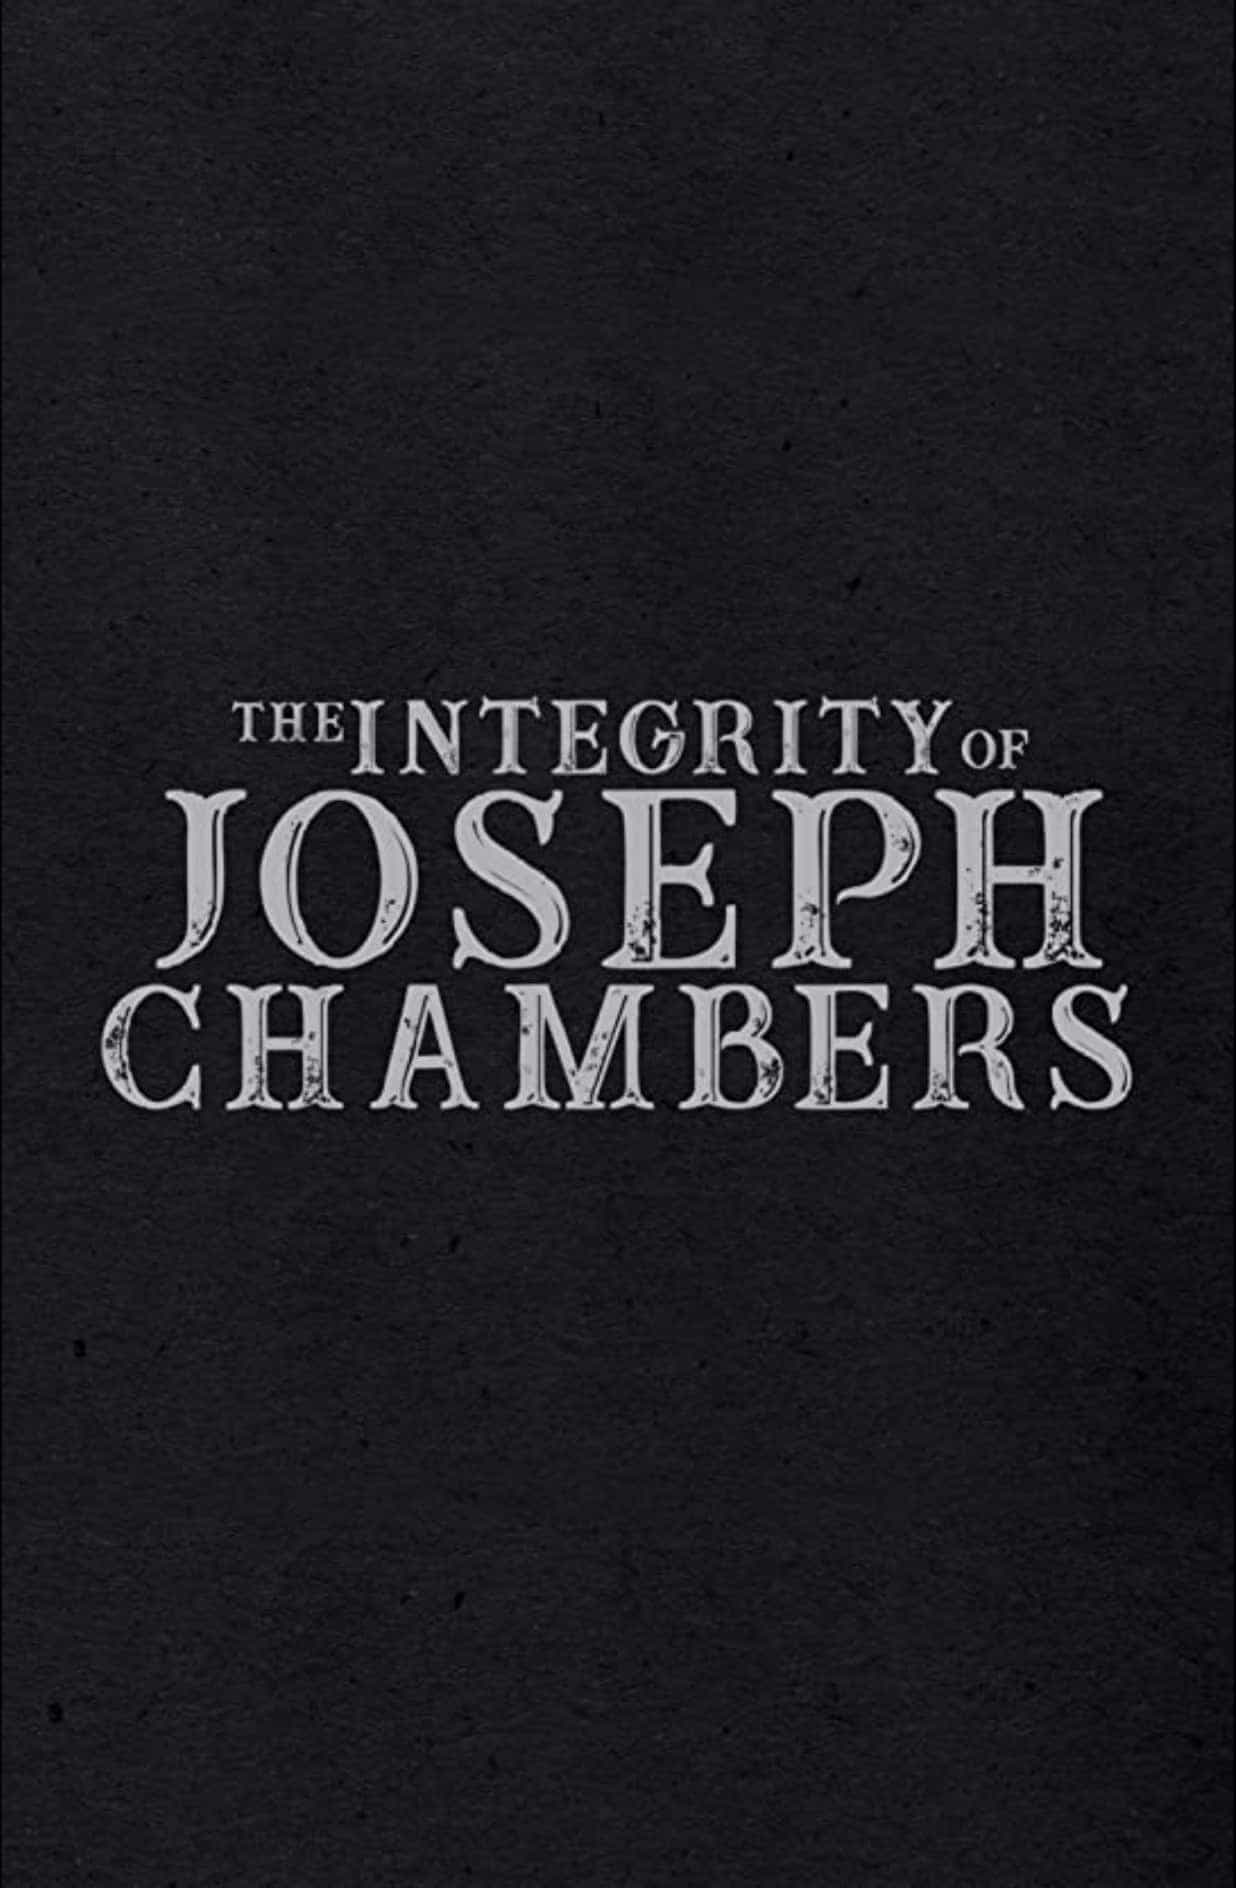 The Integrity of Joseph Chambers